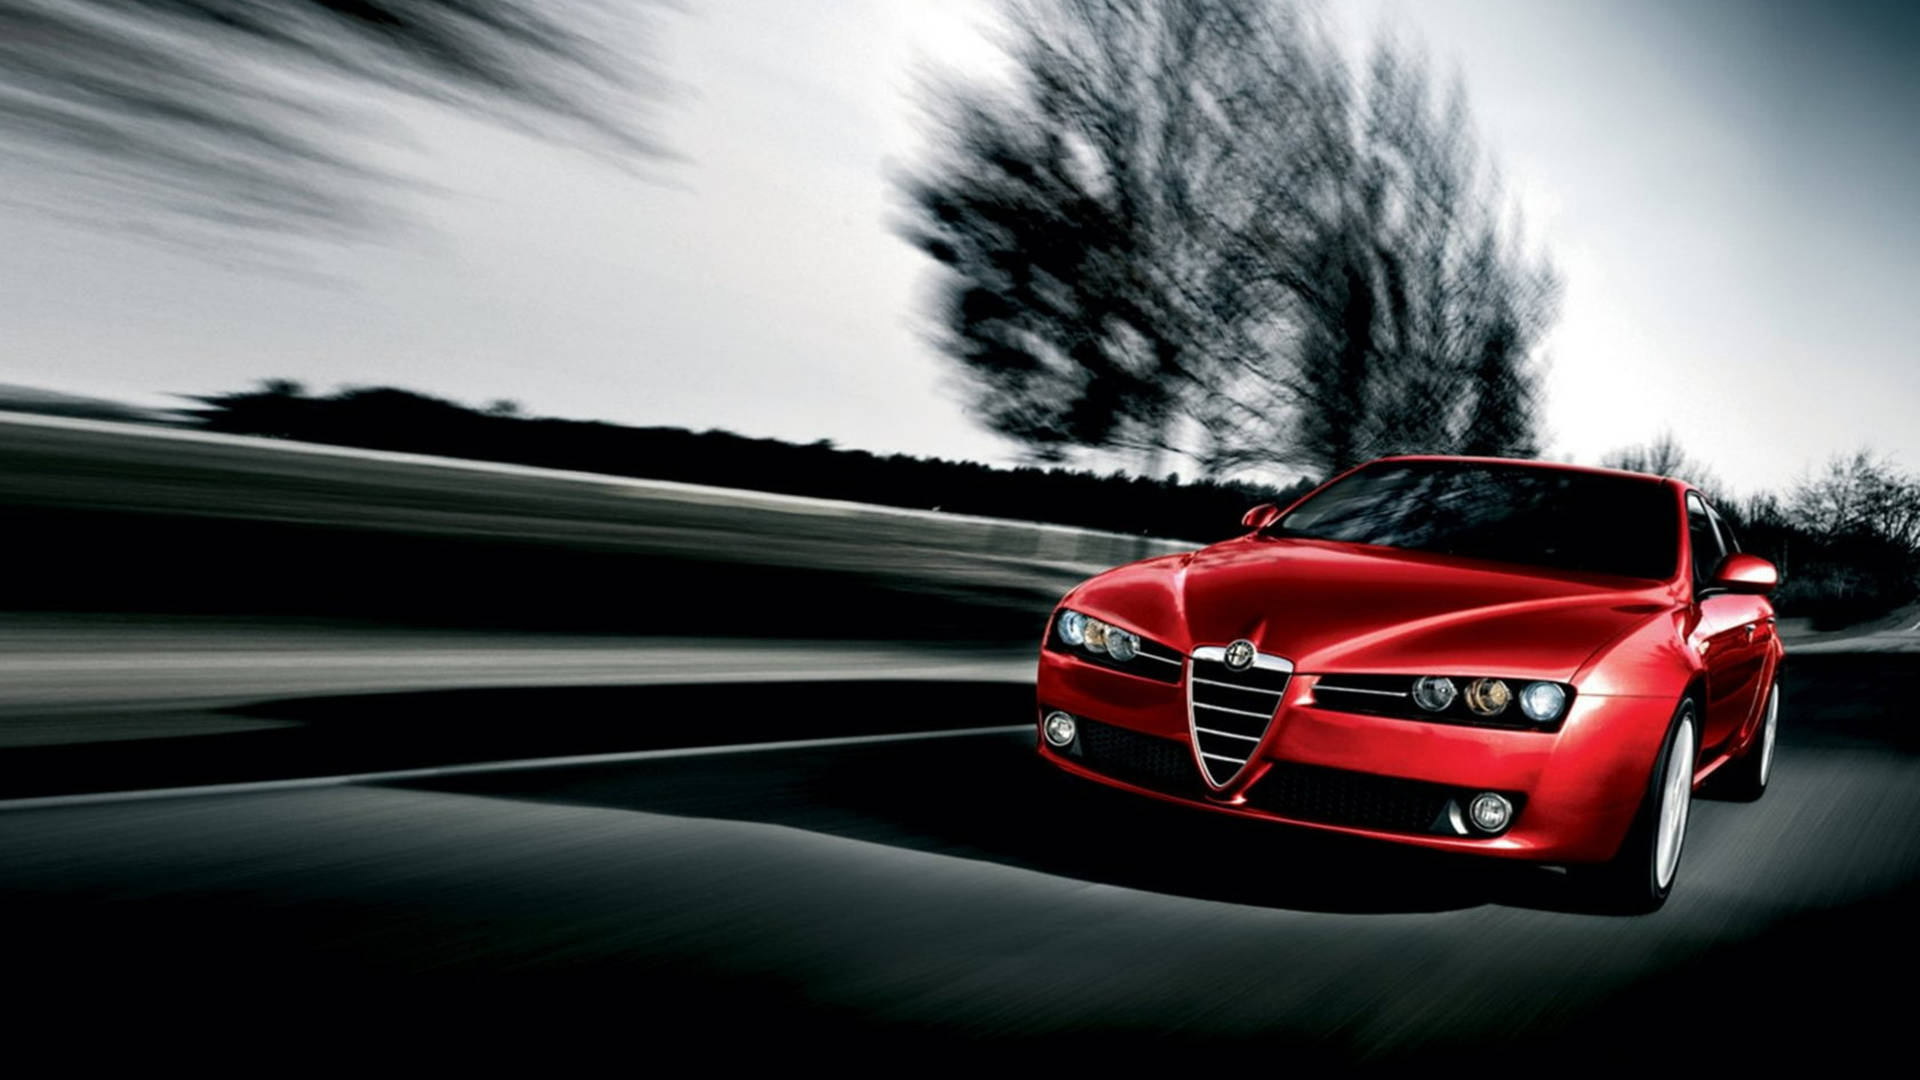 Speeding Red Alfa Romeo 159 Background